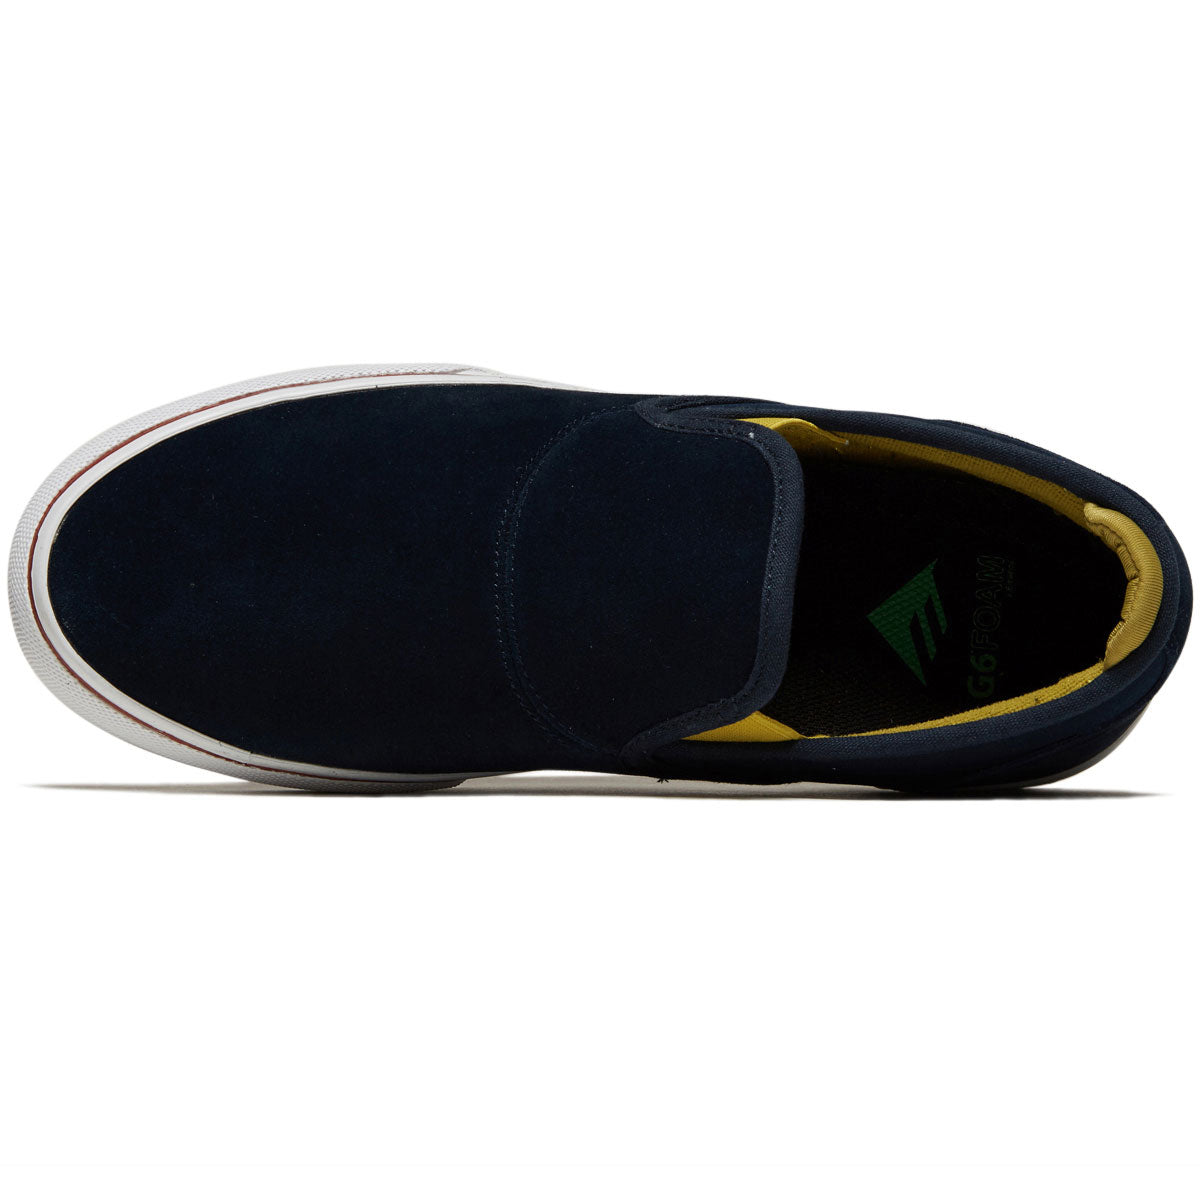 Emerica Wino G6 Slip-on Shoes - Navy/Gold/White image 3